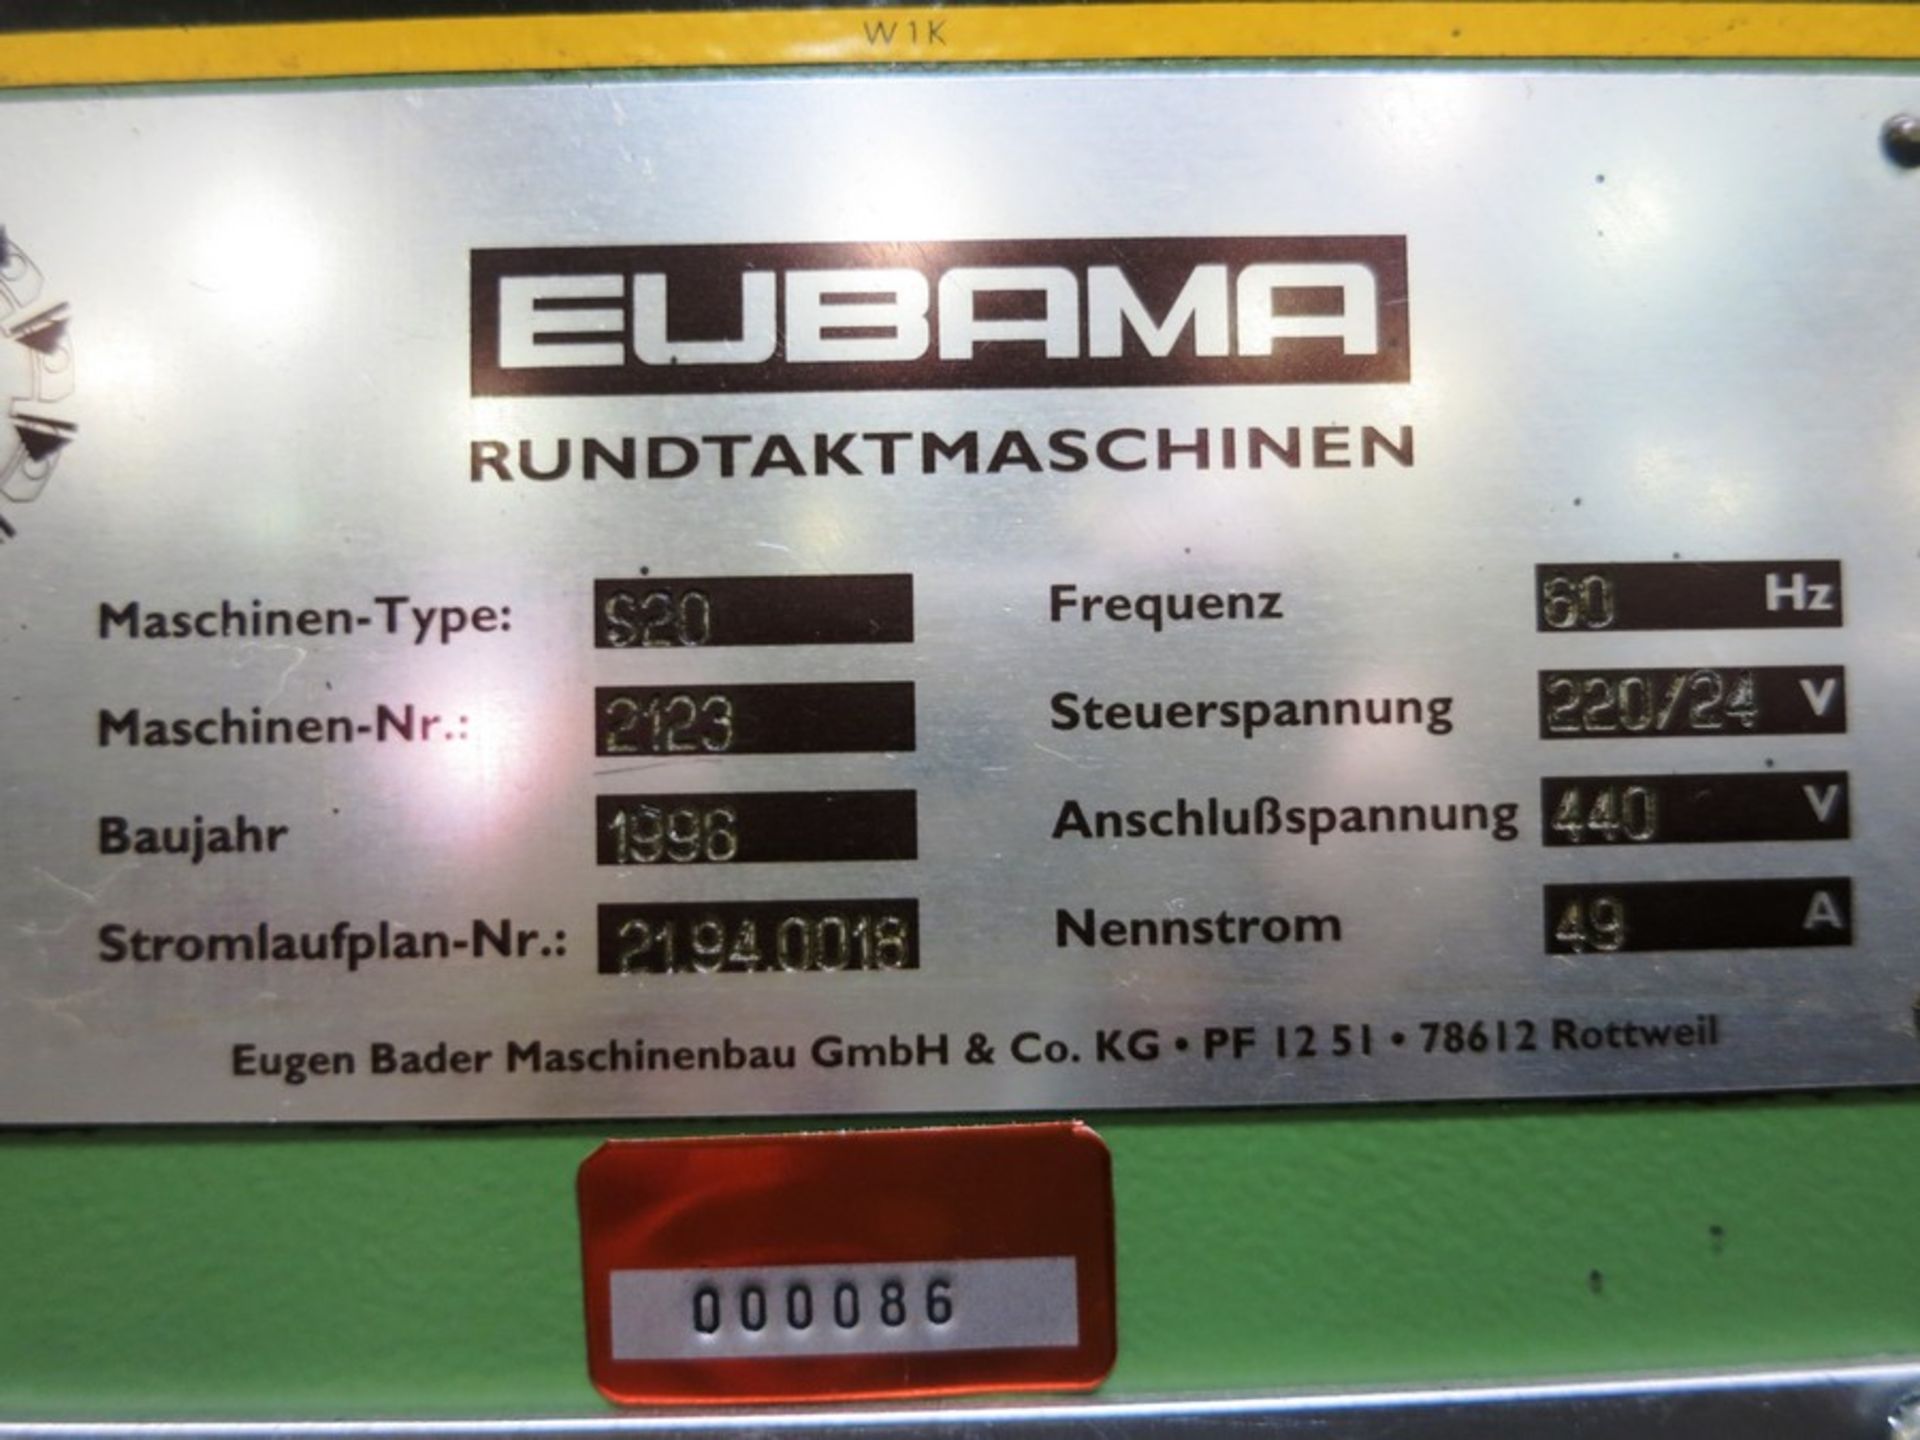 EUBAMA MODEL S20 12 STATION ROTARY TRANSFER MACHINE, S/N 94050718 - Image 4 of 6